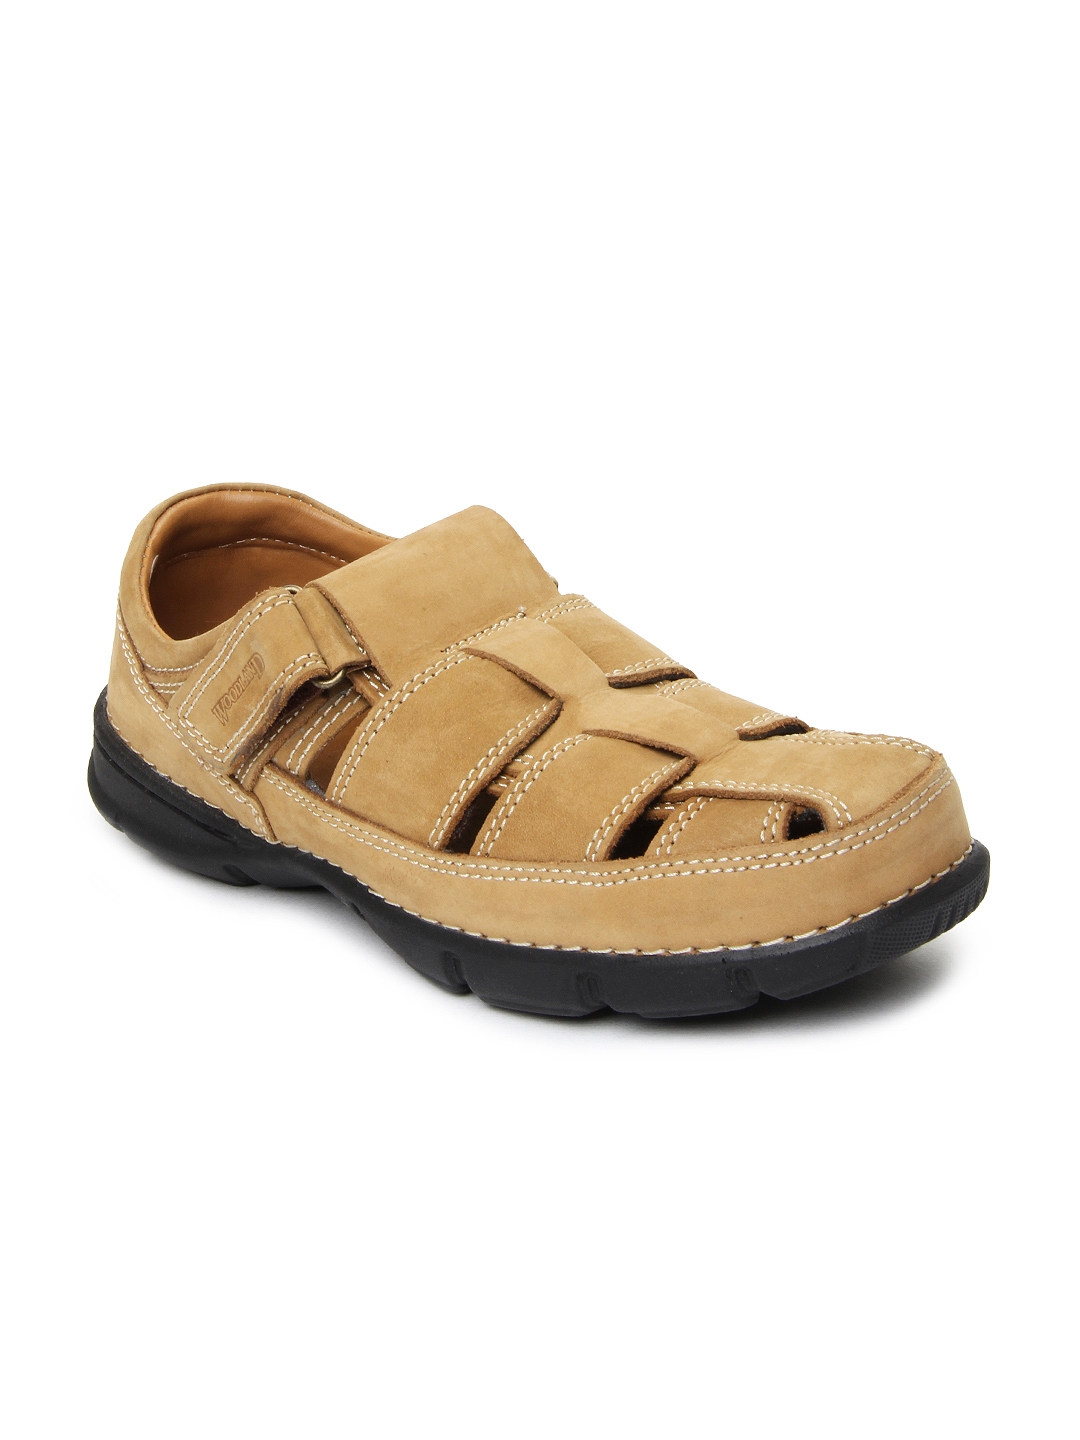 Buy Woodland Men Leather Comfort Sandals - Sandals for Men 6989413 | Myntra